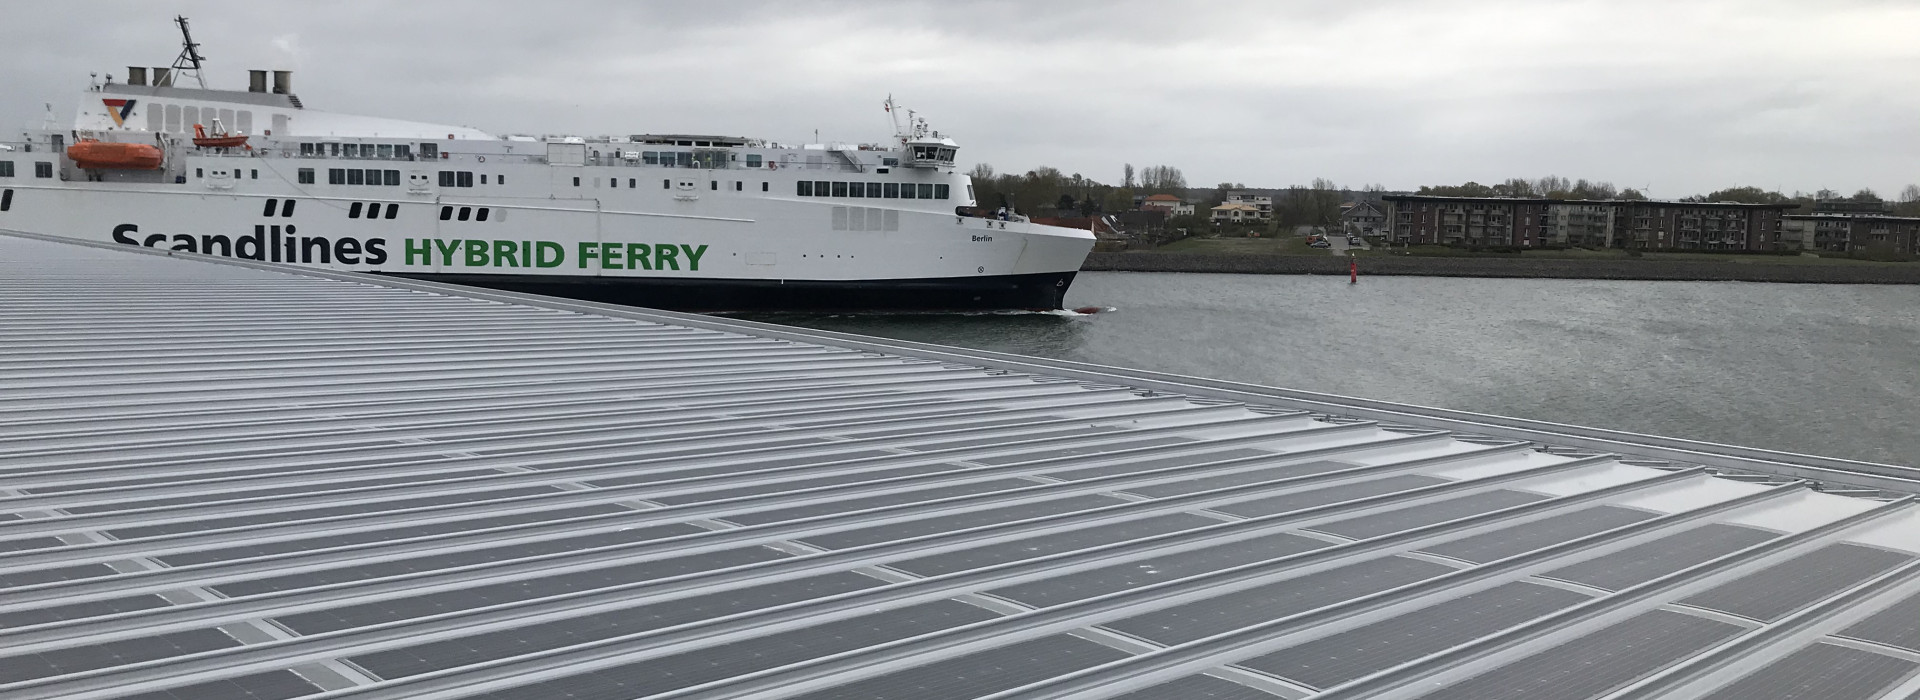 Rostock harbor relies on DAS Energy PV modules